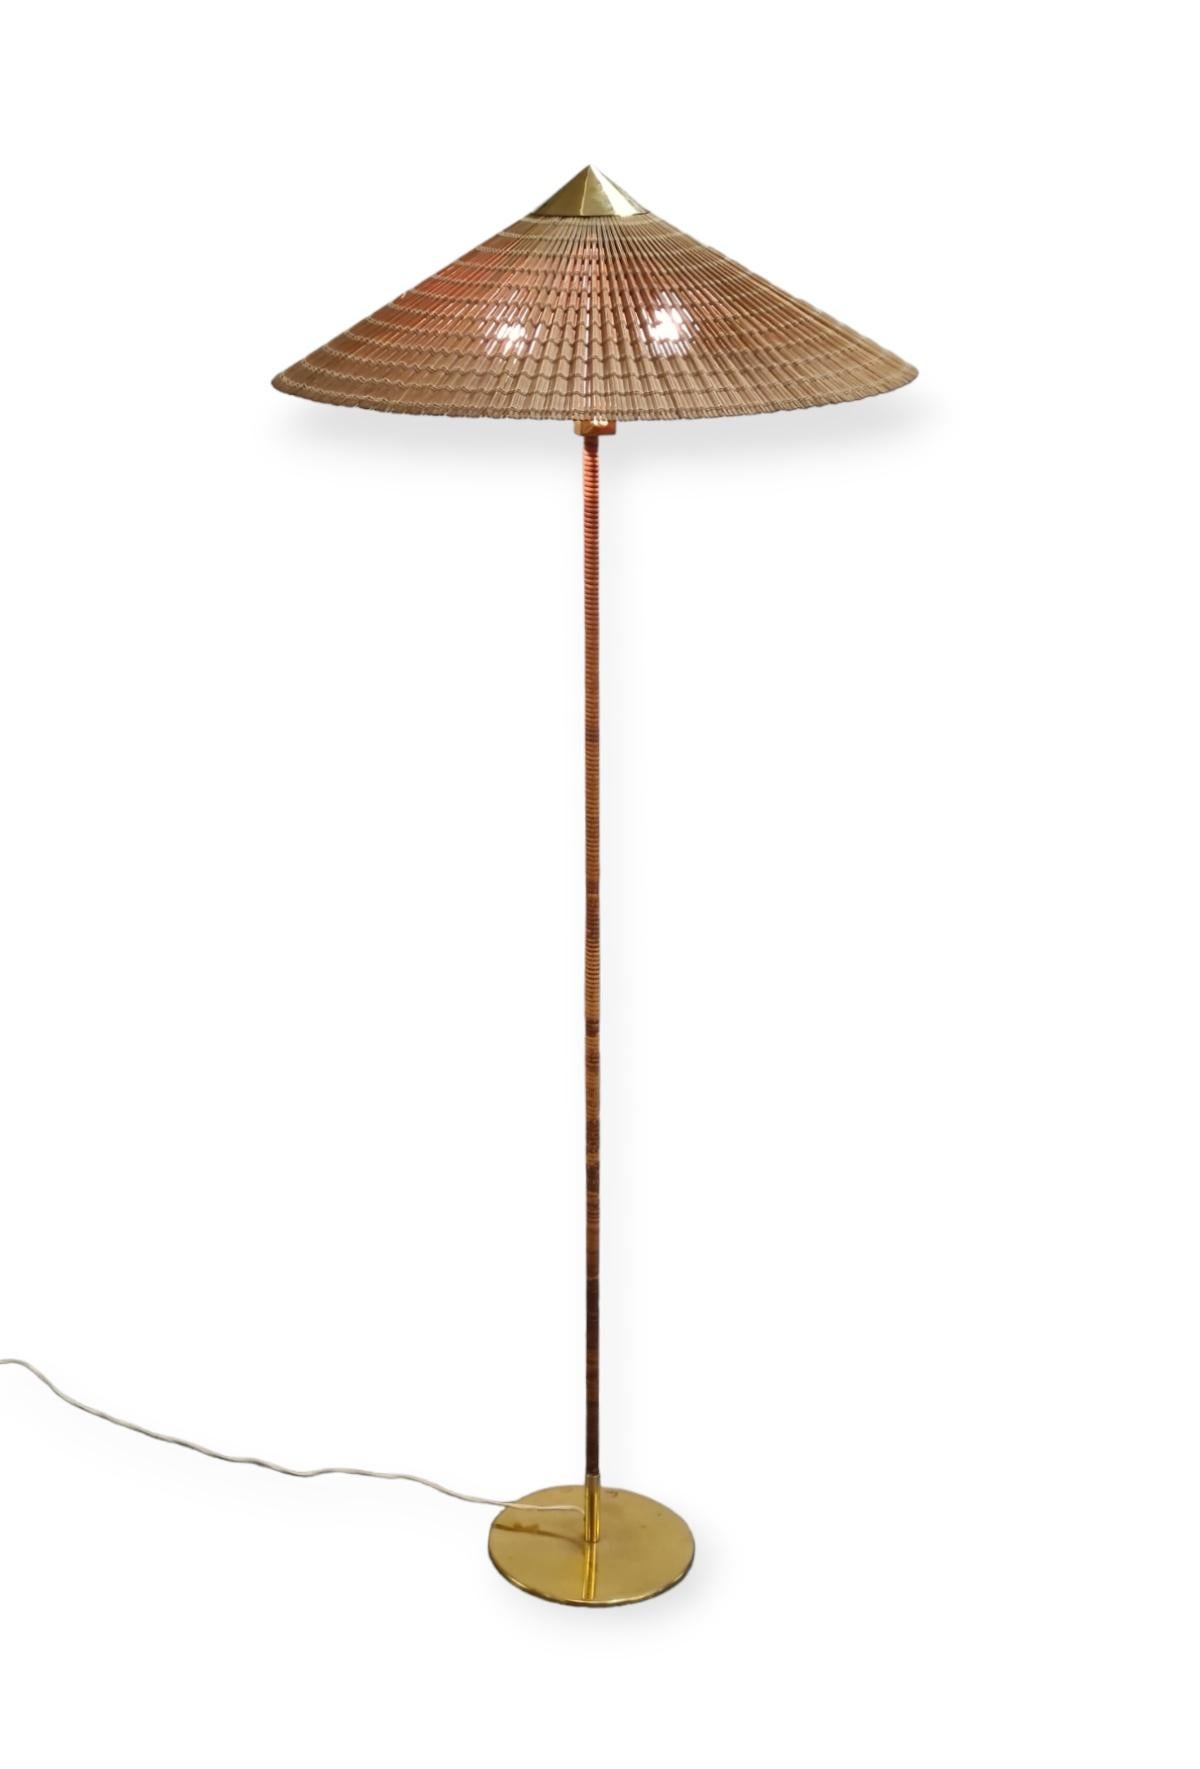 Finnish Paavo Tynell `Chinese Hat` Floor Lamp Model 9602, Idman 1950s